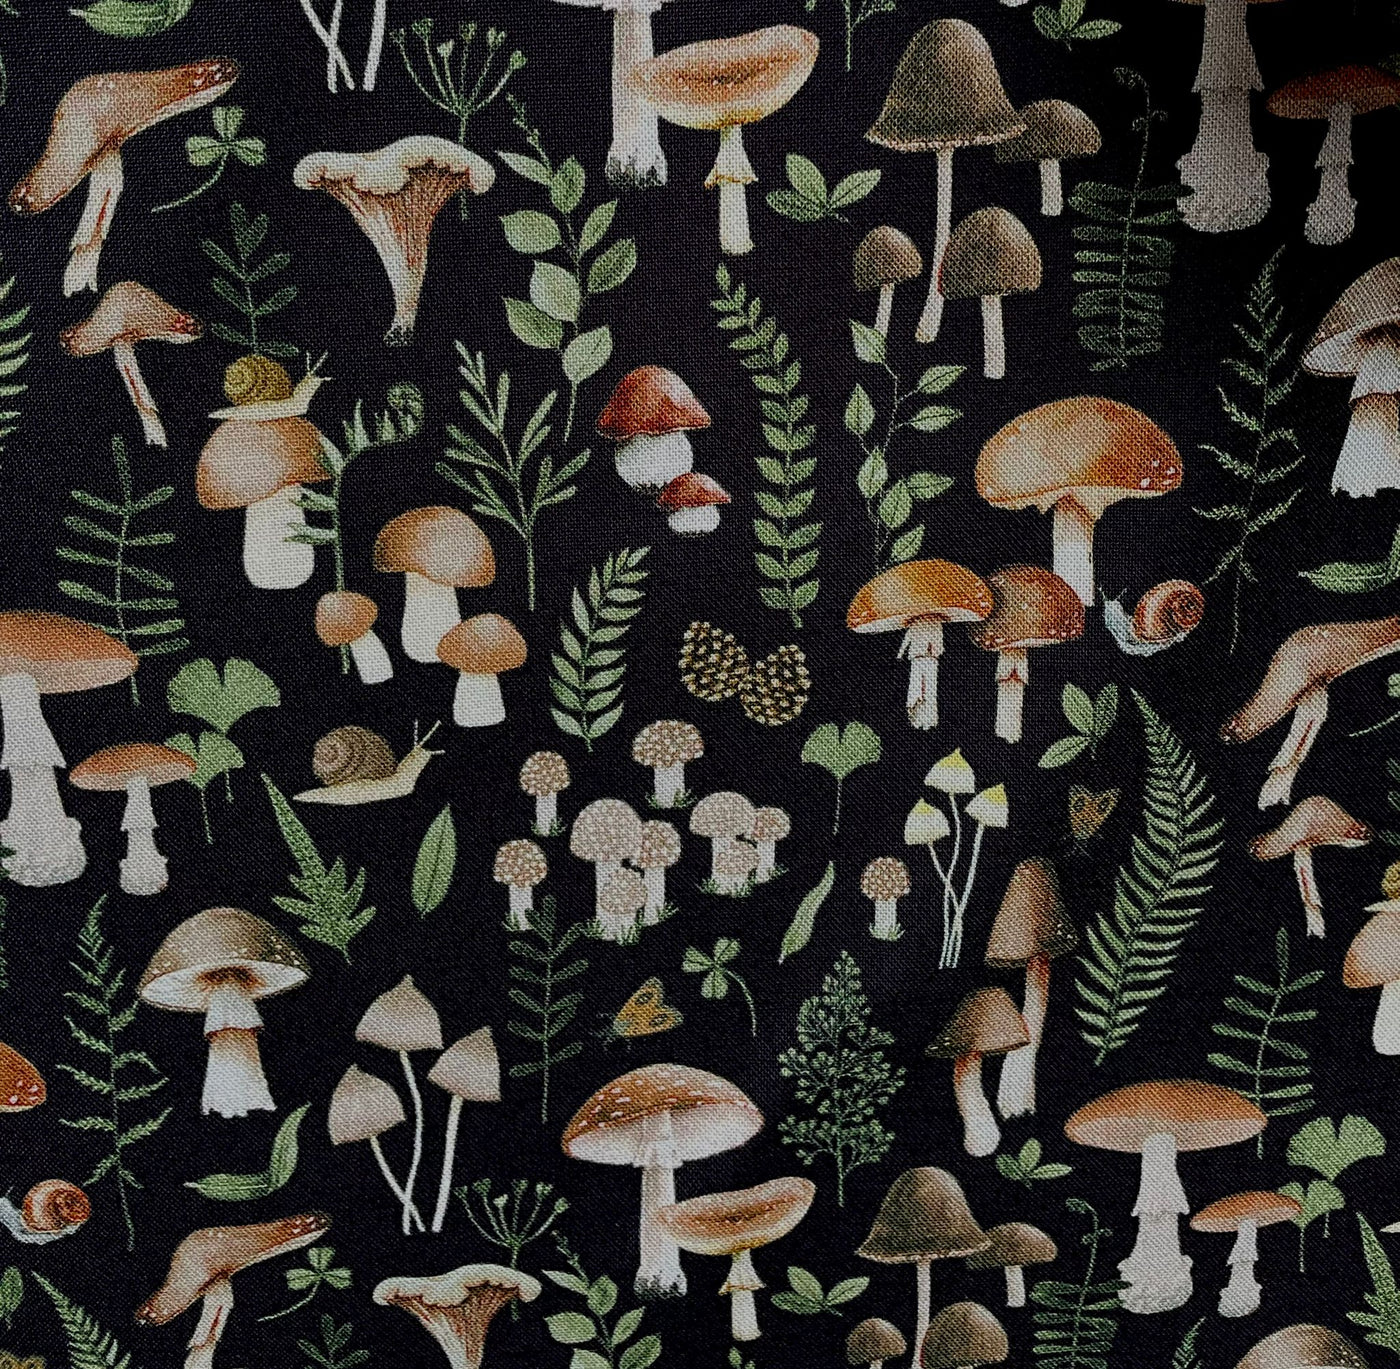 100% Cotton machine washable fabric, black background with toadstools & mushrooms, moths & snails, ferns &  foliage